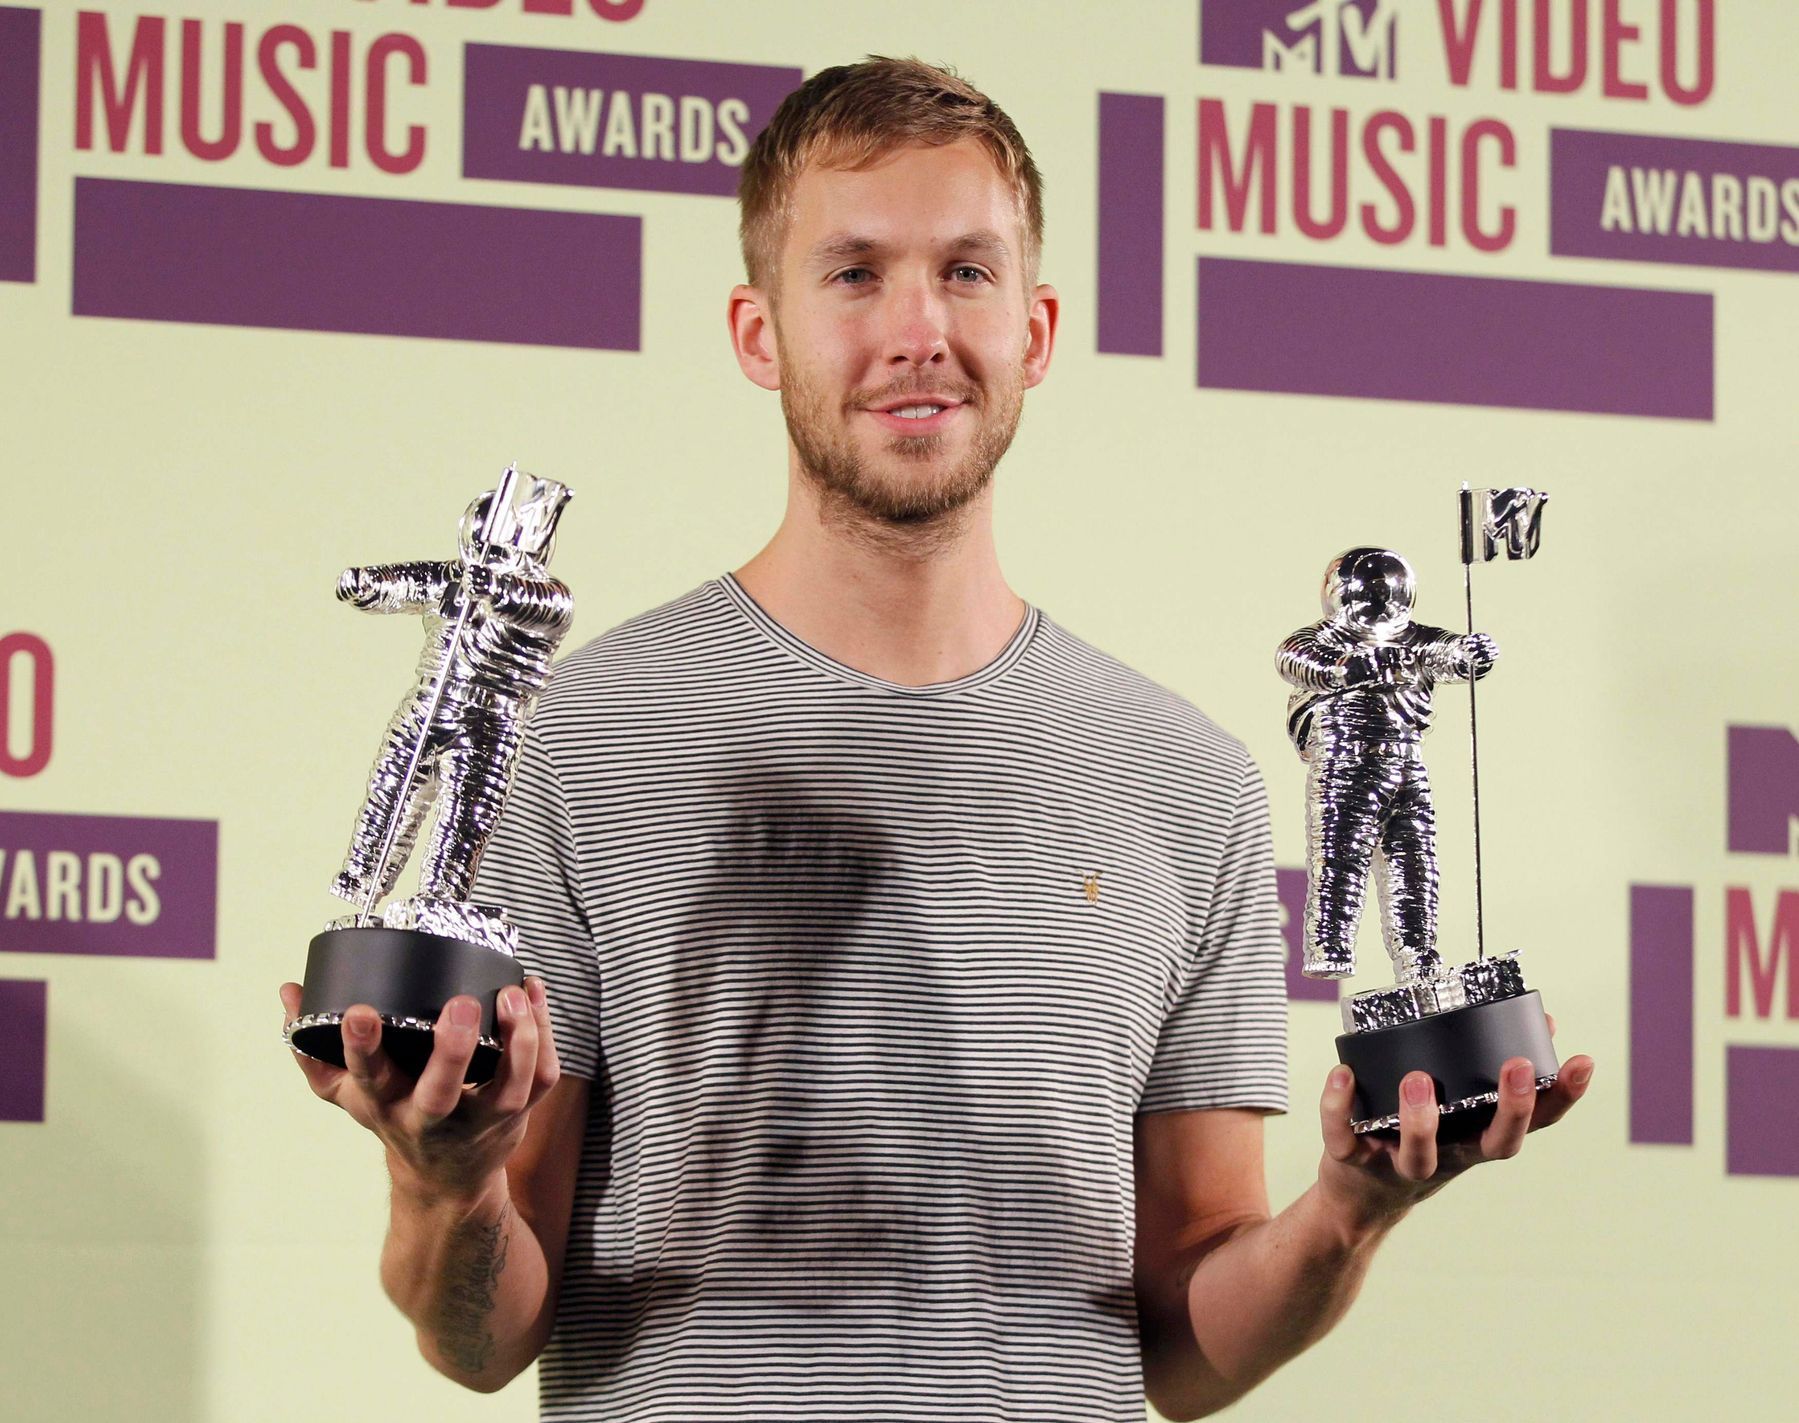 MTV Video Music Awards - Calvin Harris